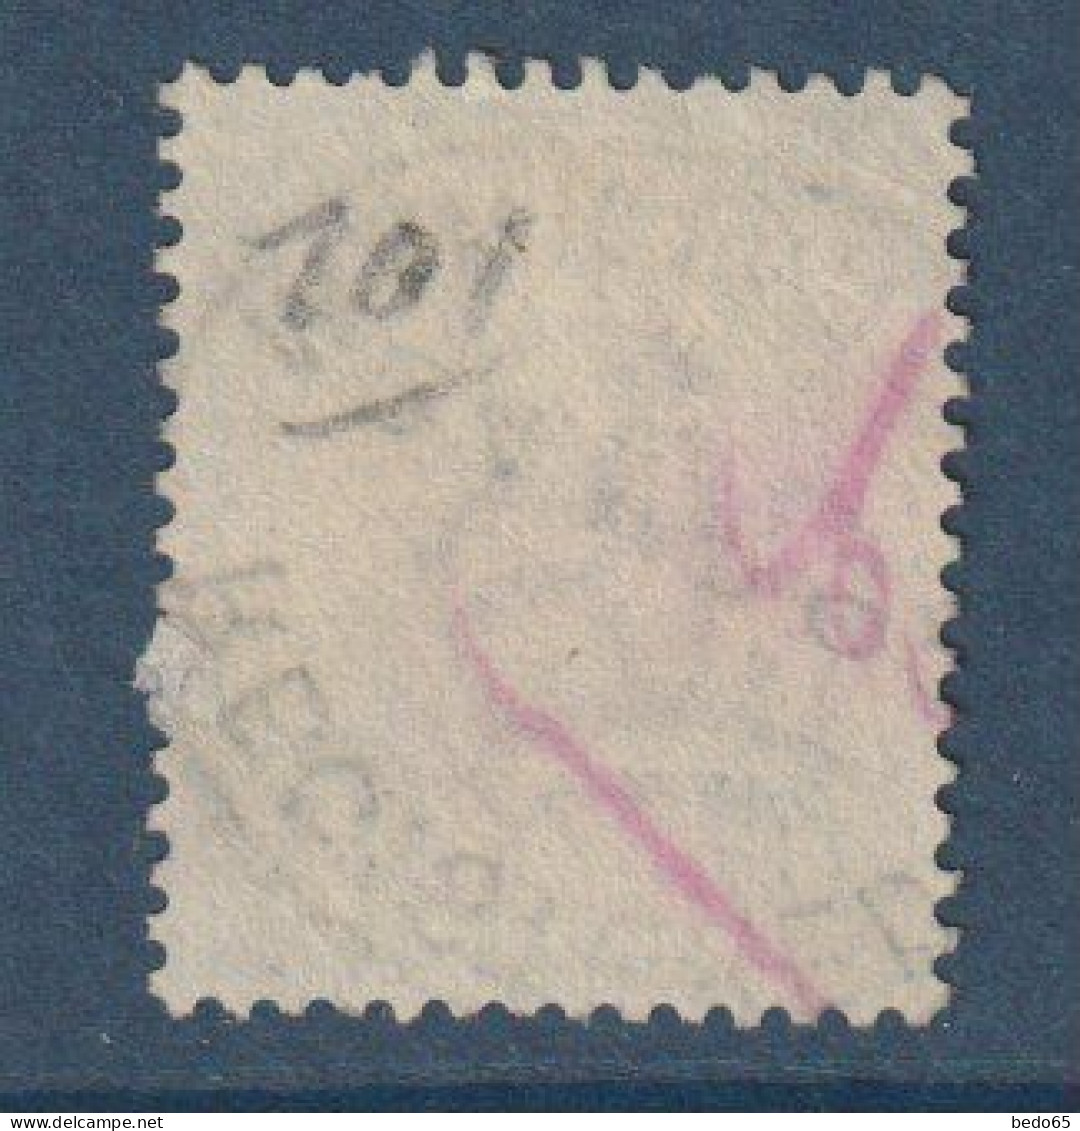 N° 101 OBL SUPERBE / USED - Used Stamps